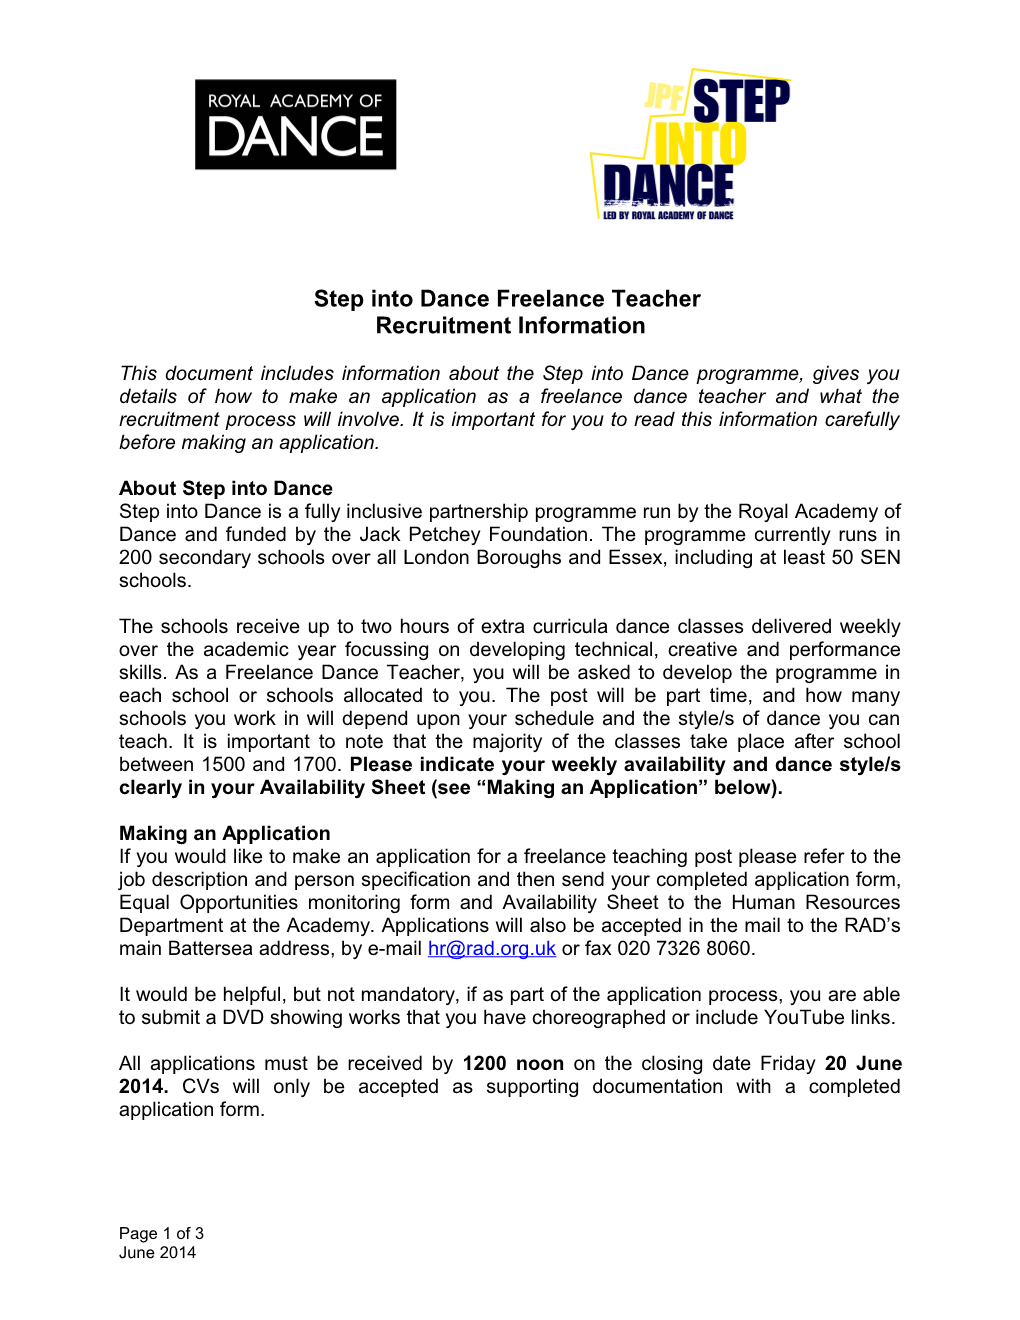 Step Into Dance Freelance Teacher Recruitment : Additional Information